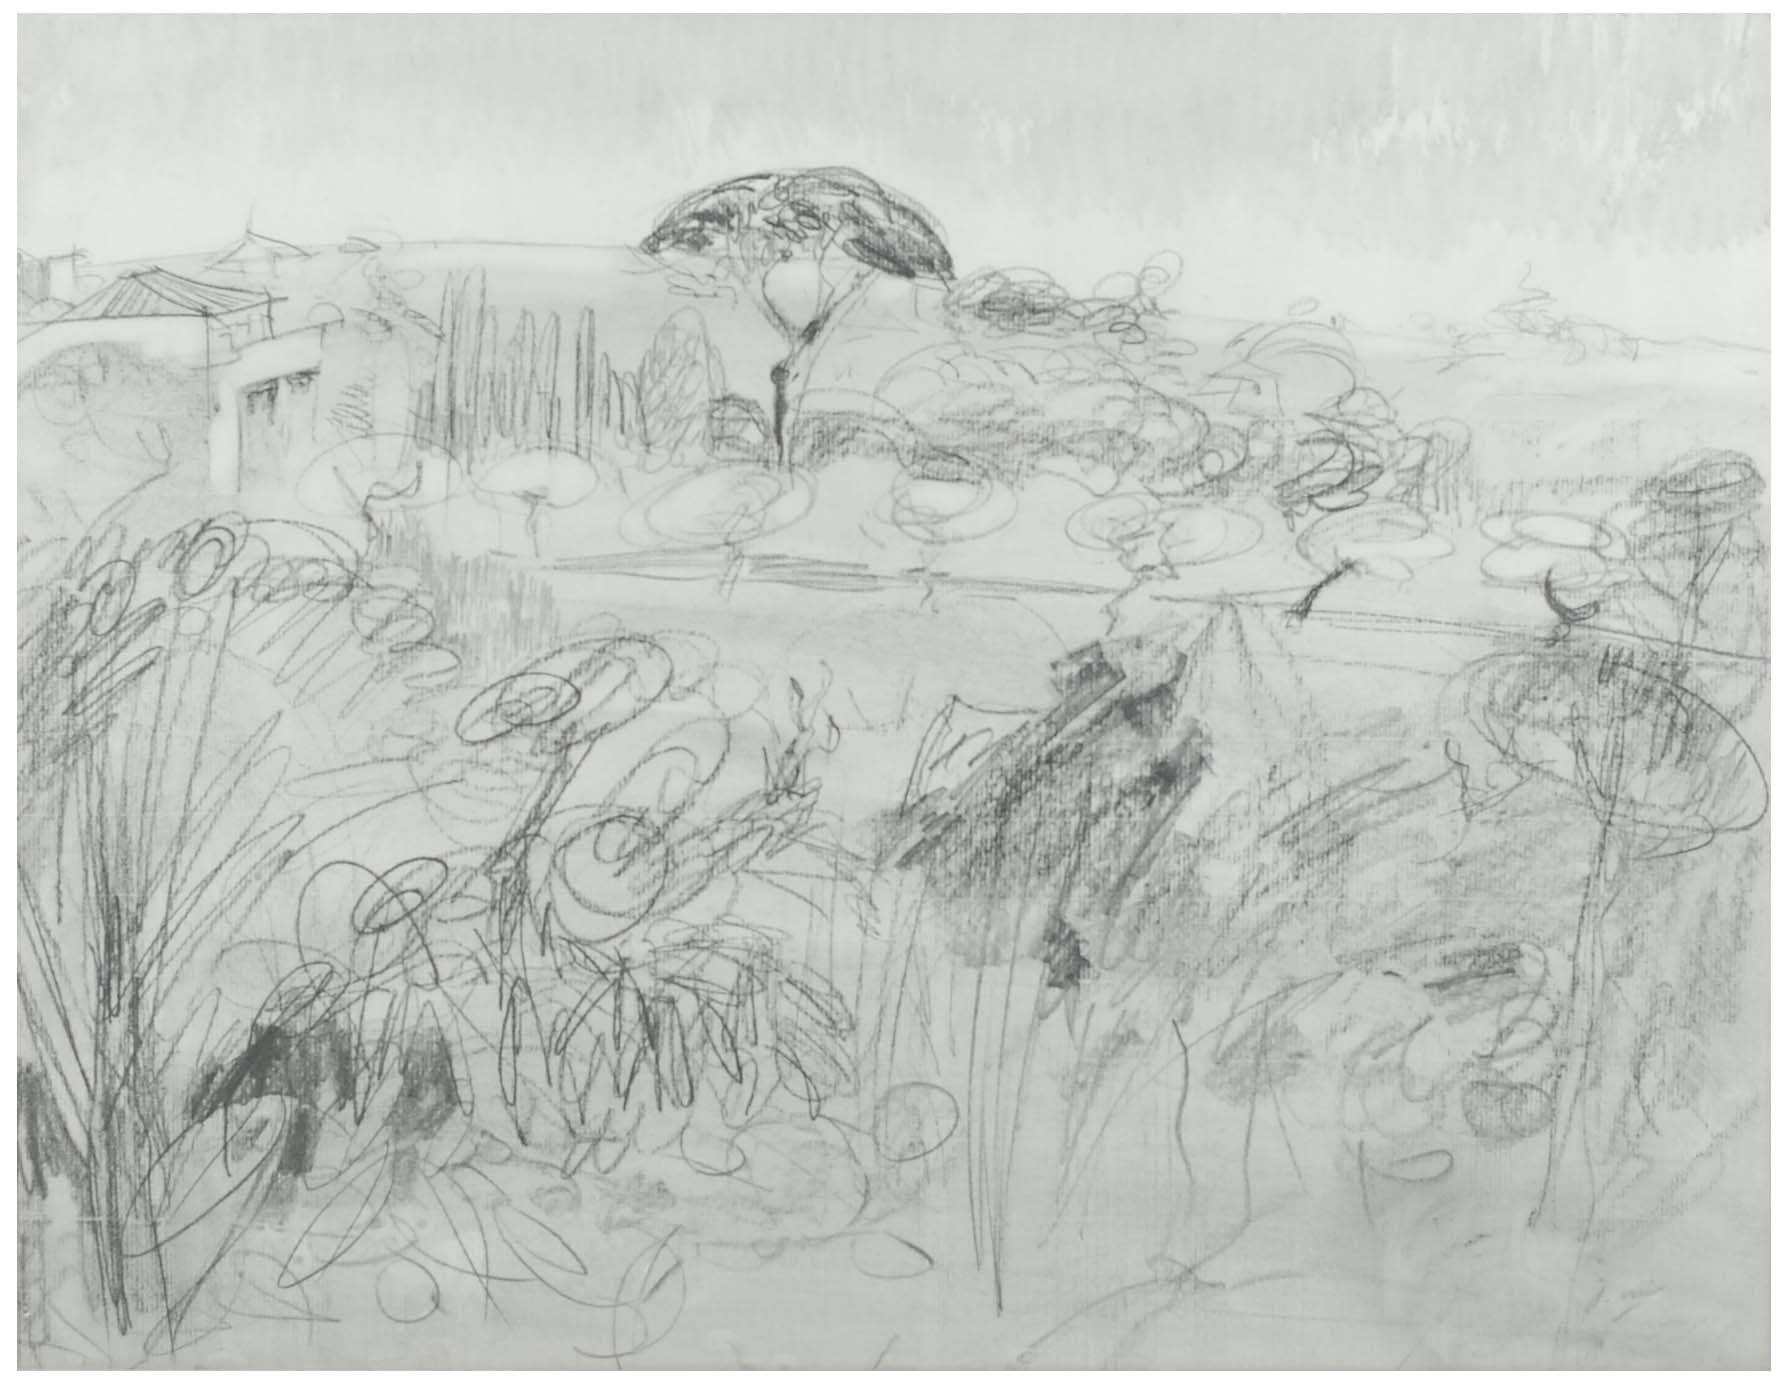 JOAQUIM MIR I TRINXET (1873-1940) "Landscape".